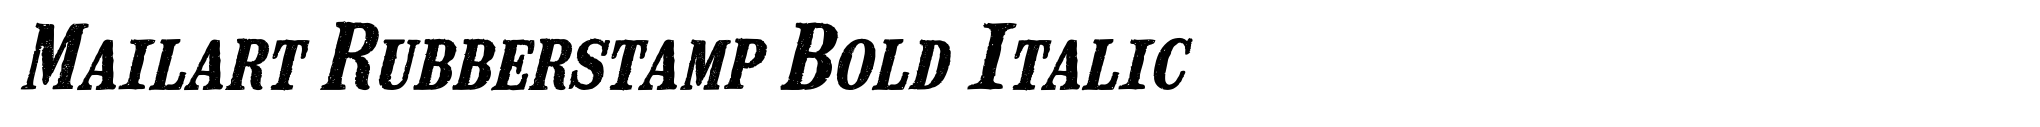 Mailart Rubberstamp Bold Italic image